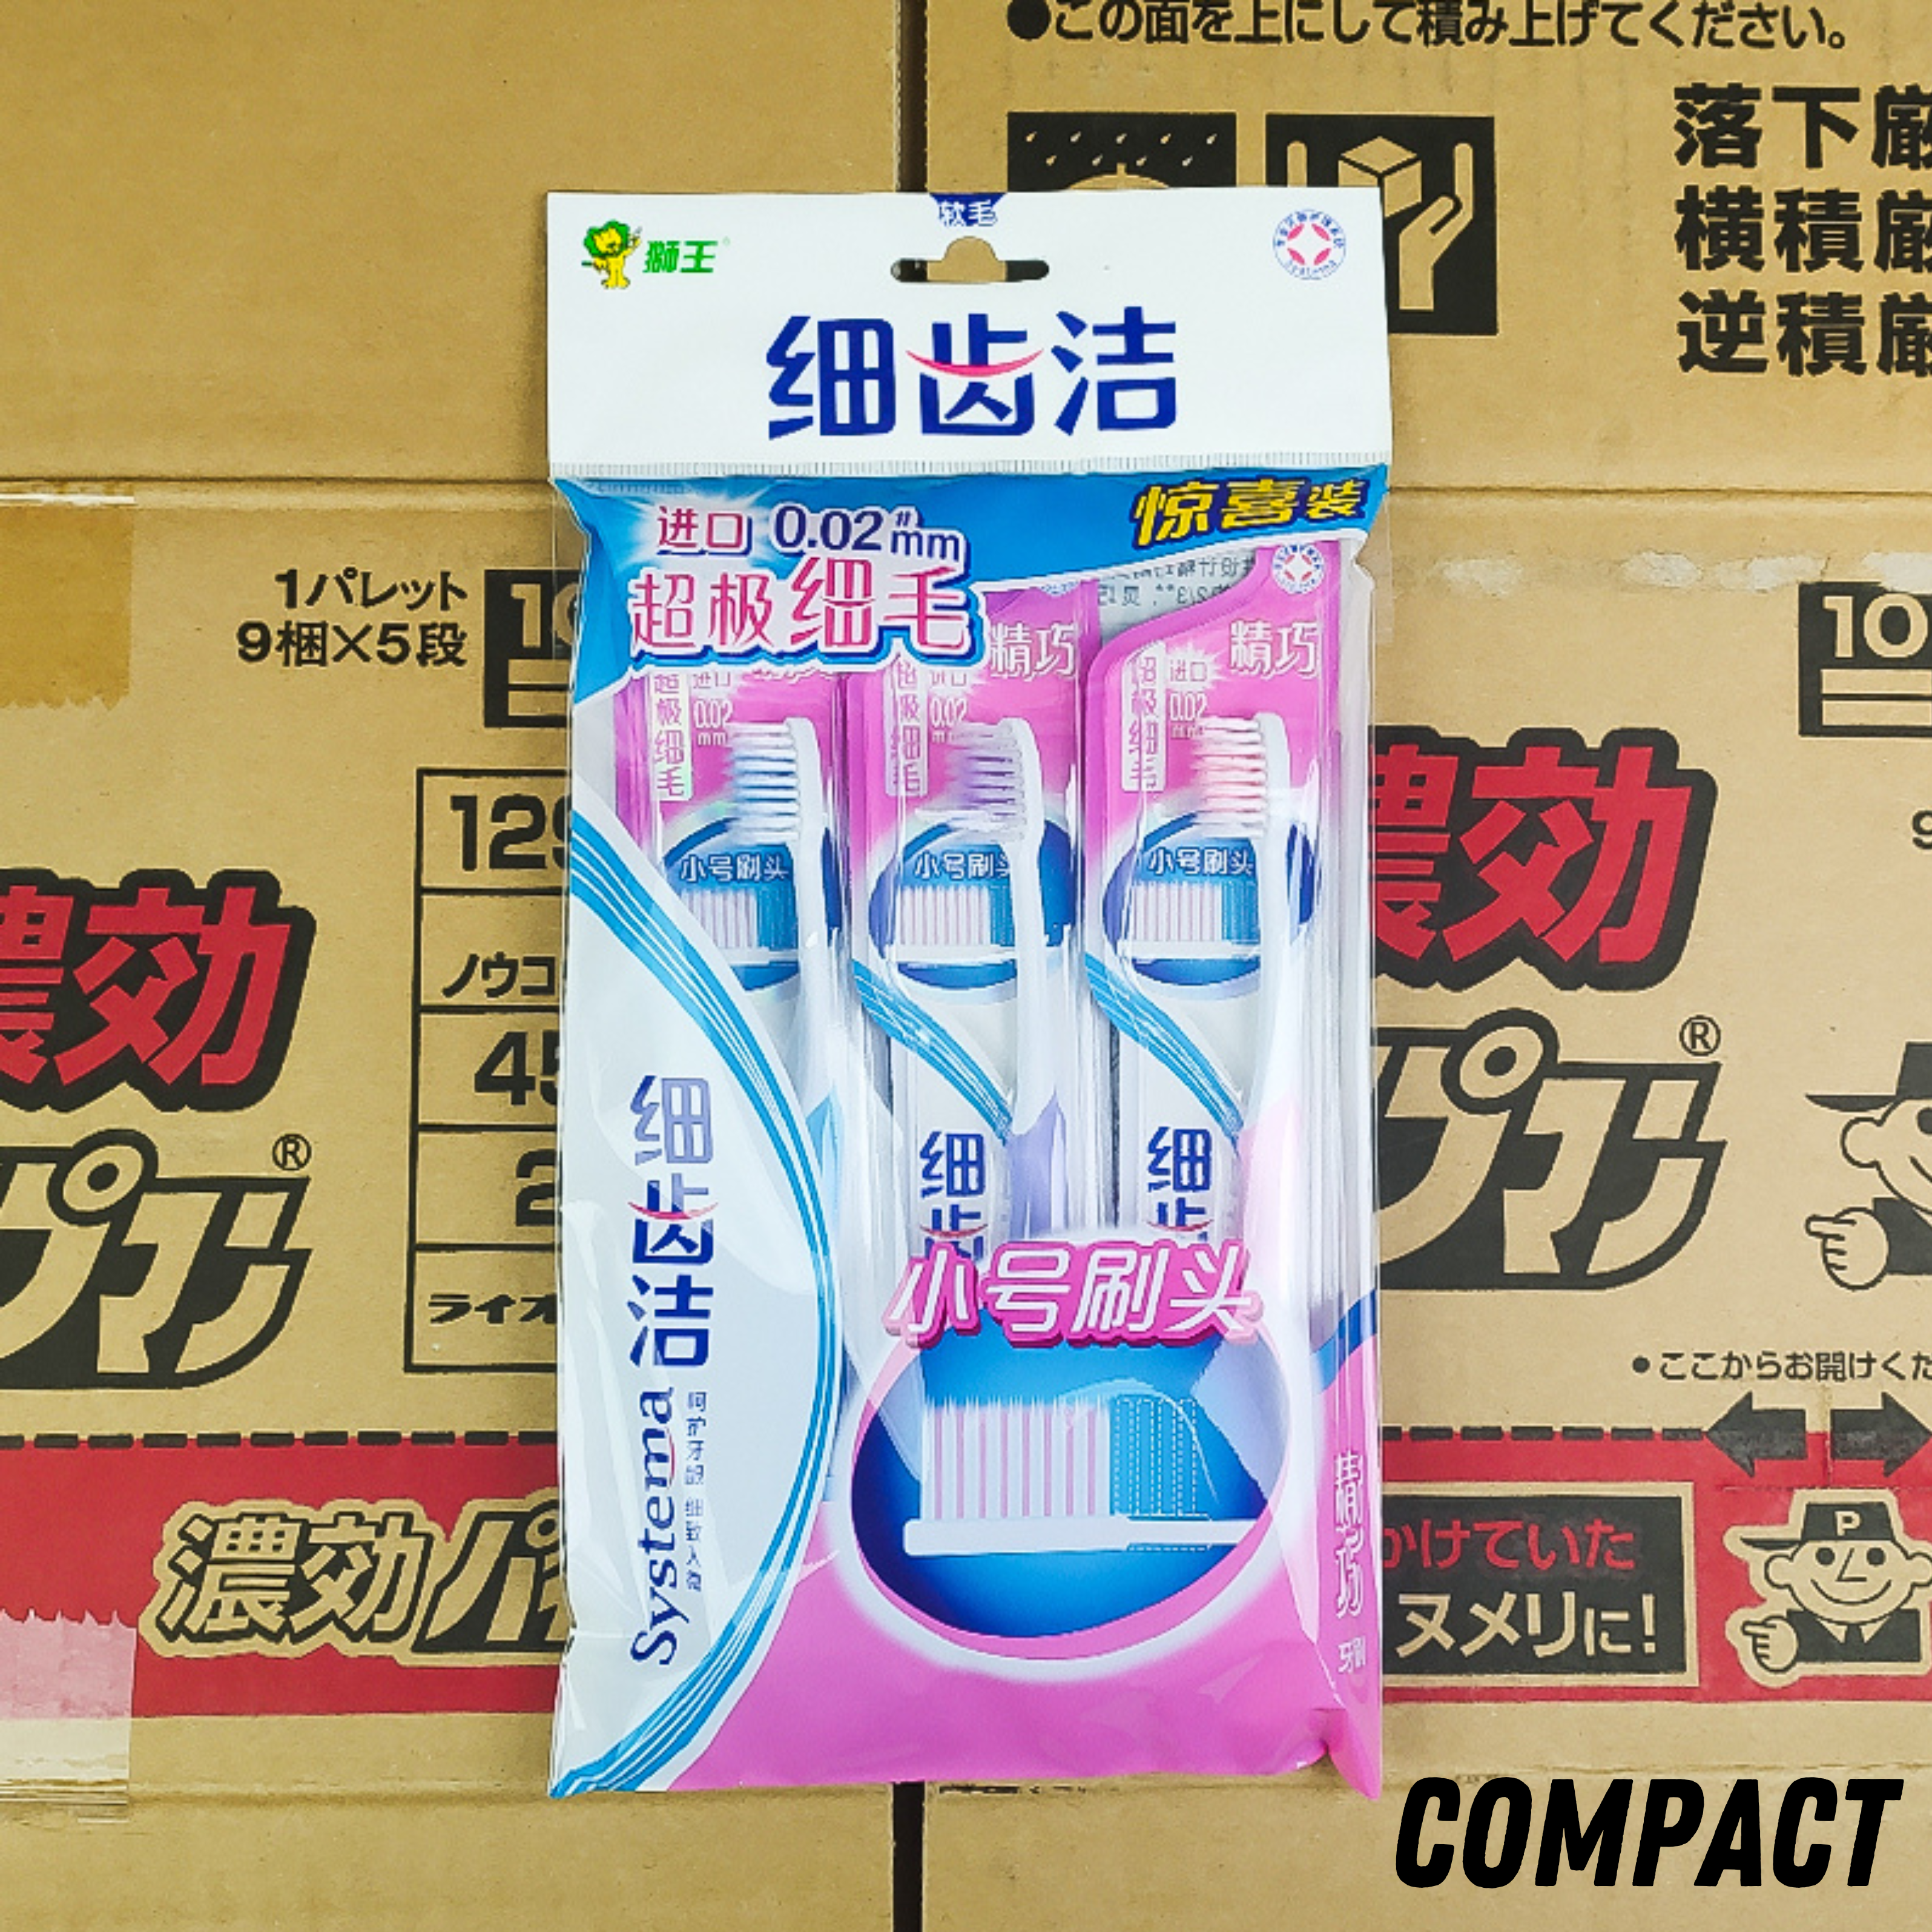 Lion Compact Toothbrush 3pcs Special Set 狮王细齿洁精巧牙刷3支特惠装